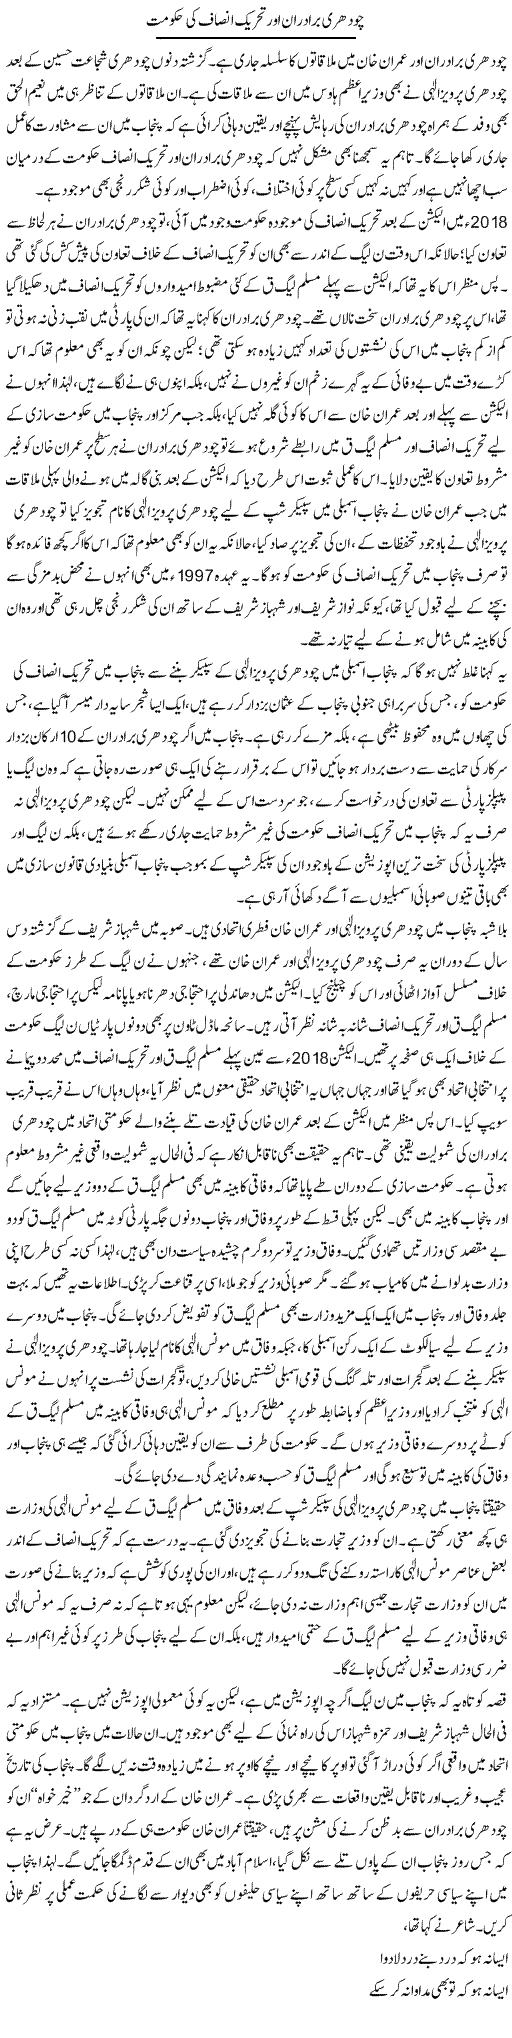 Chaudhry Bradran Aur Tehreek Insaf Ki Hukumat | Asghar Abdullah | Daily Urdu Columns